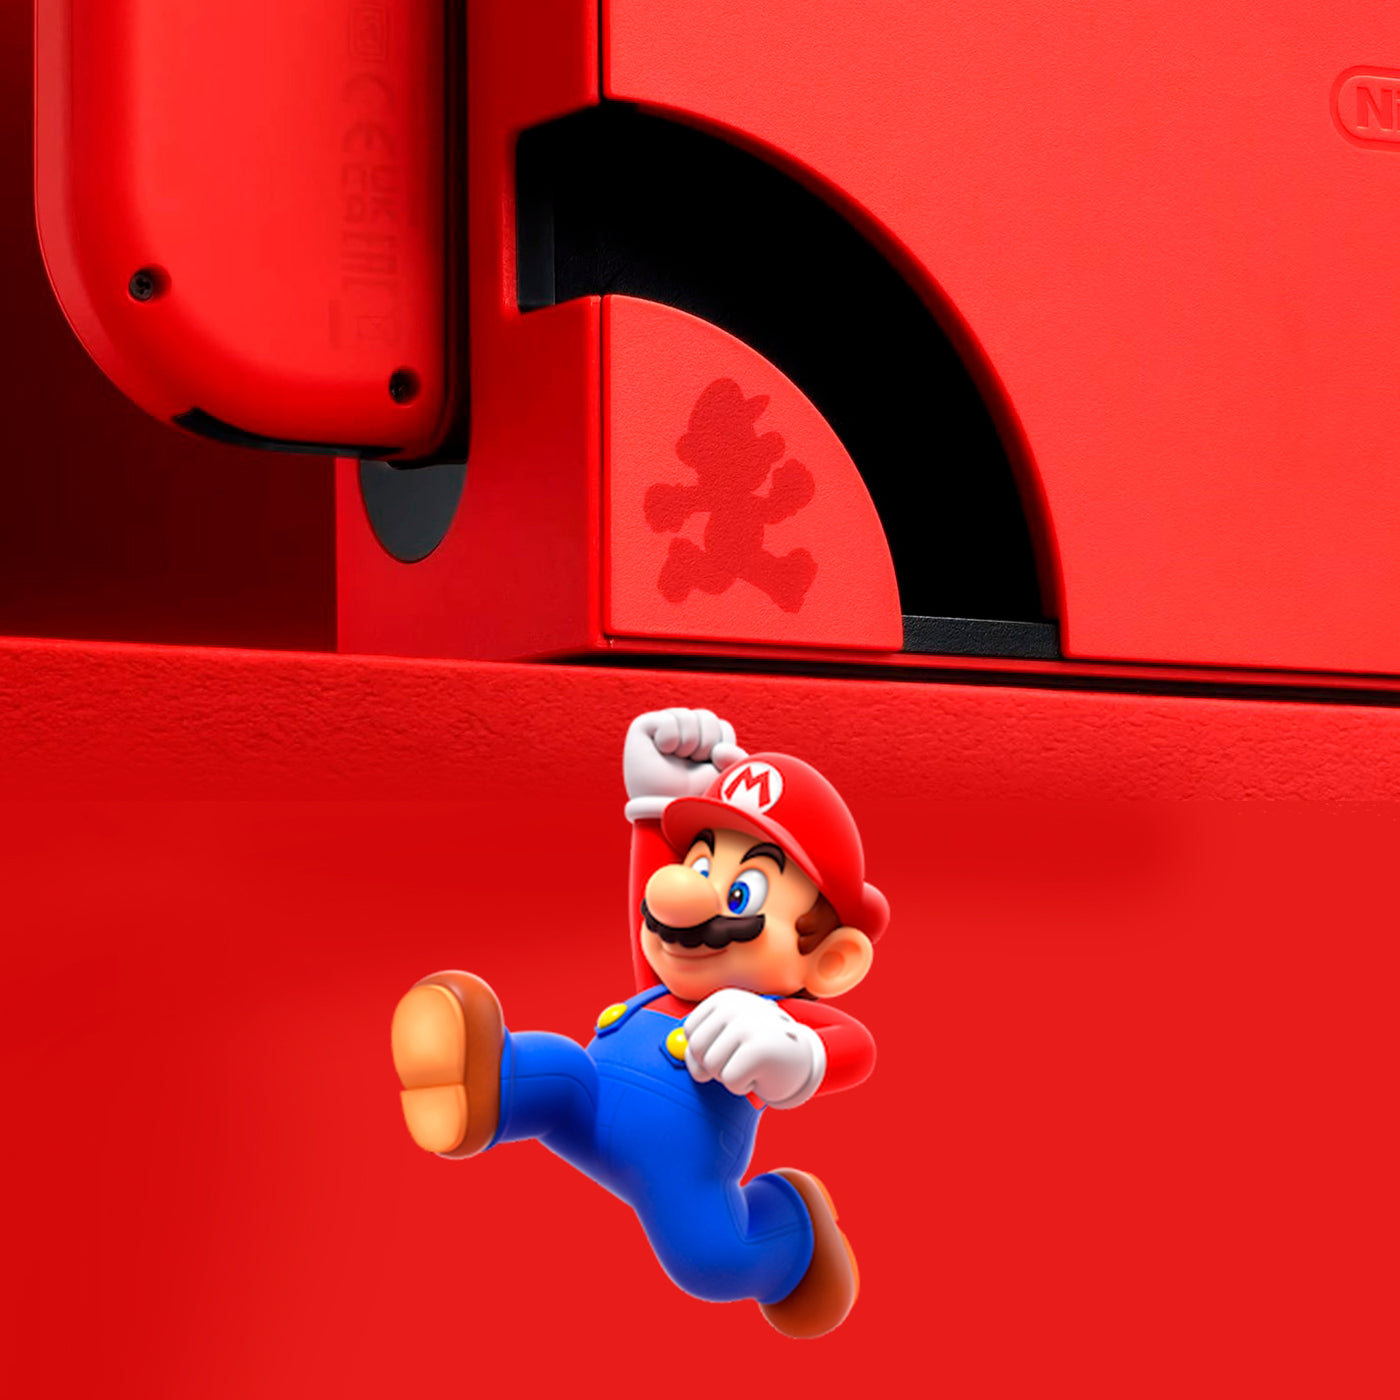 Nintendo Switch Oled Mario Red